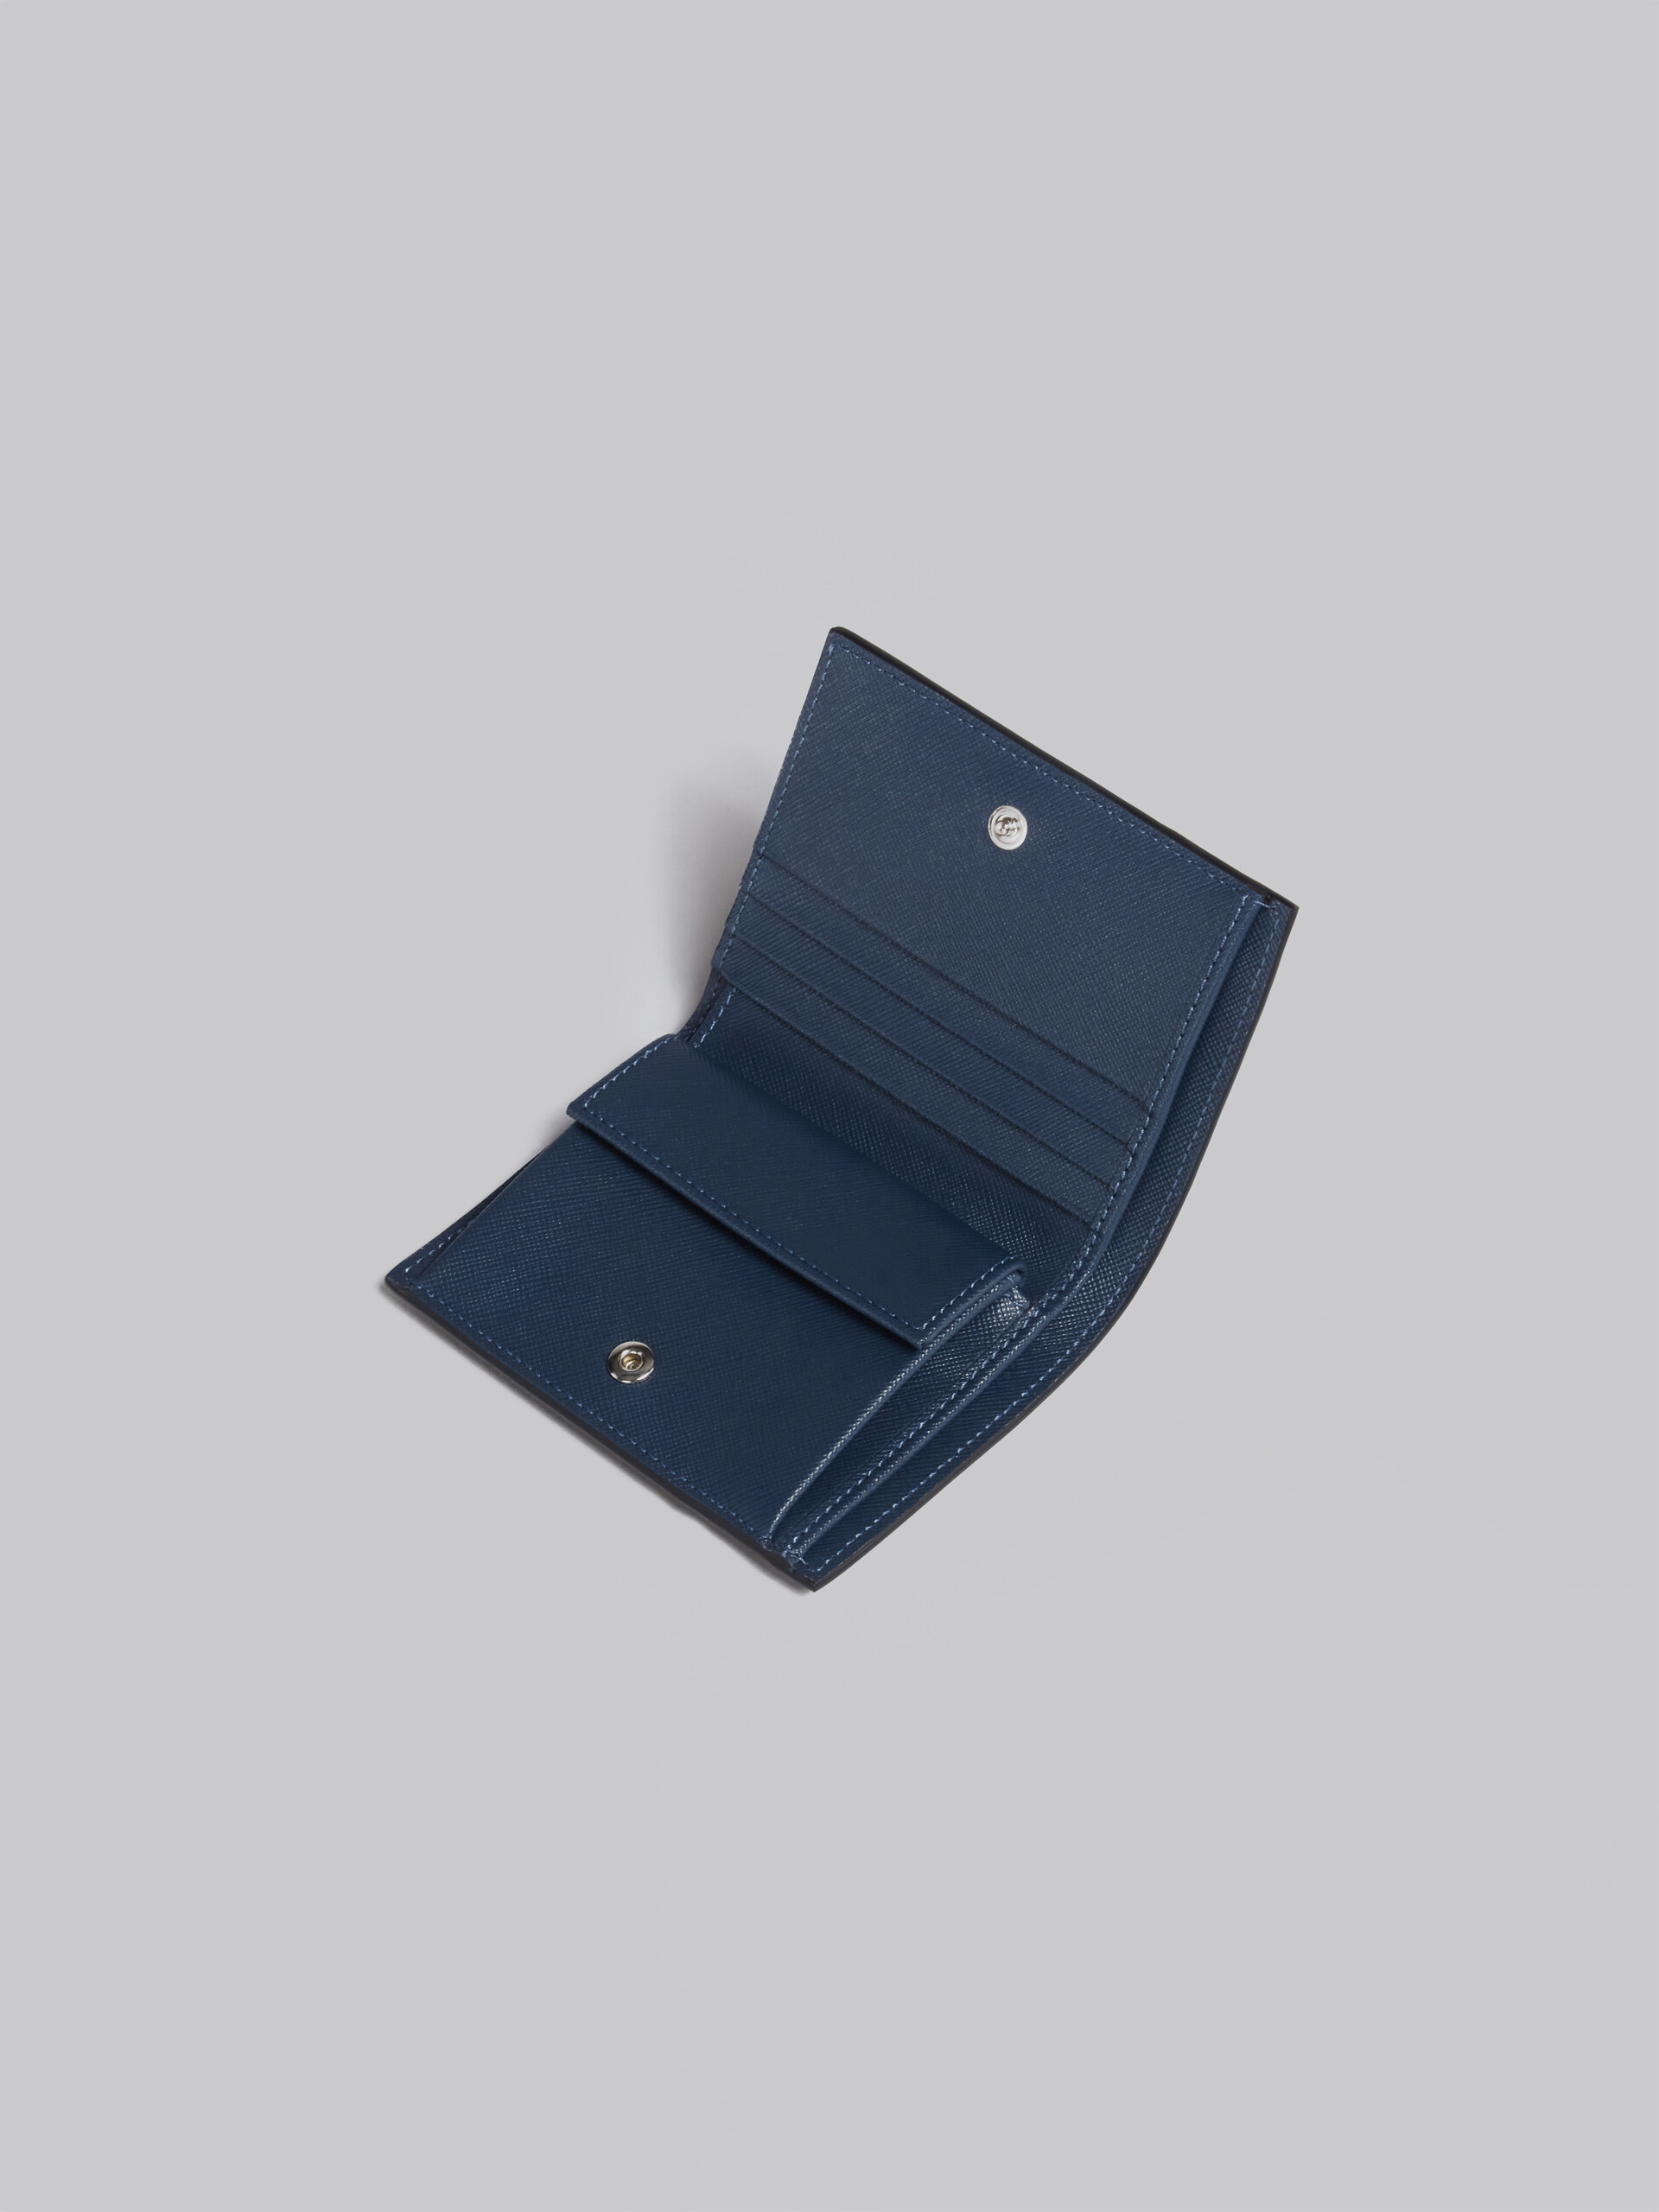 Blue Saffiano leather bi-fold wallet - Wallets - Image 4